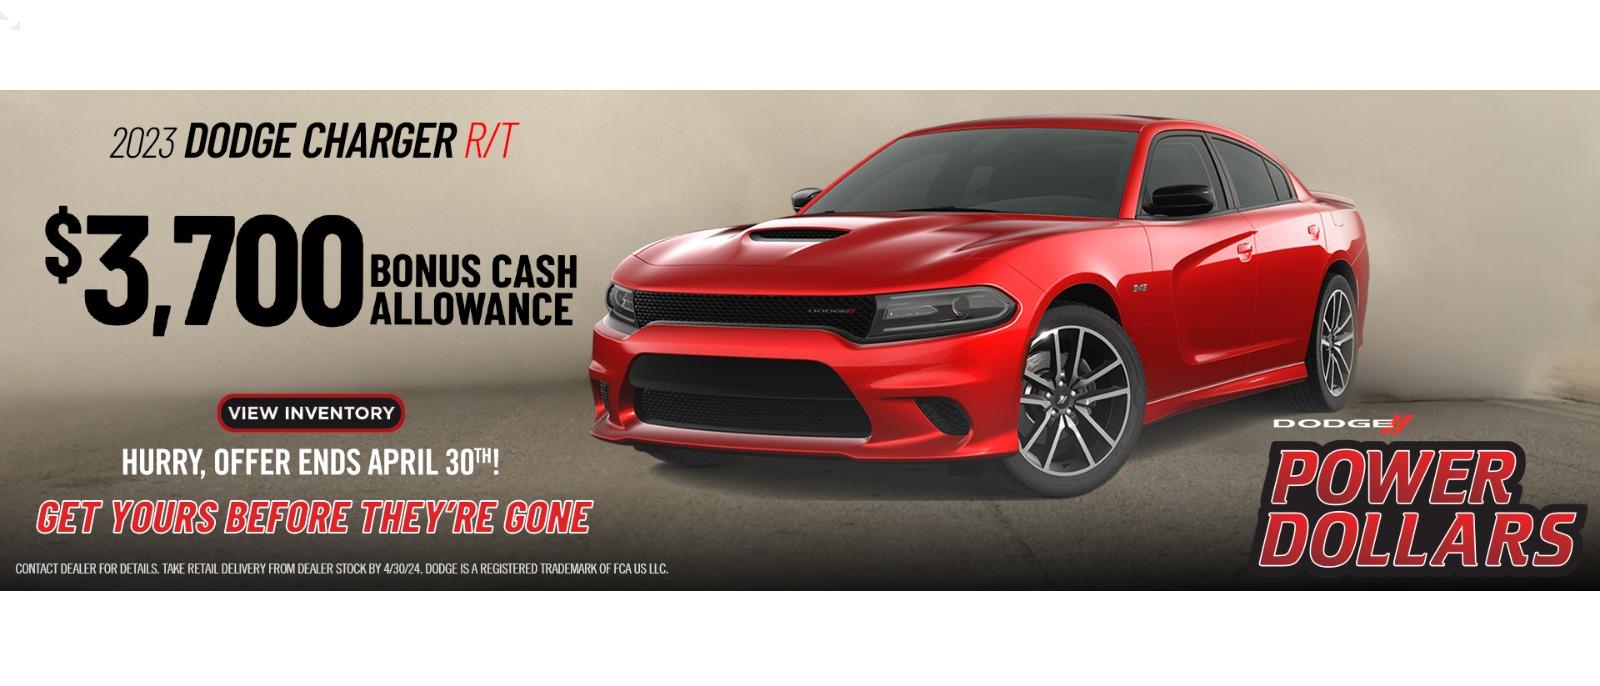 2023 Dodge Challenger R/T
$3,700 bonus cash allowance